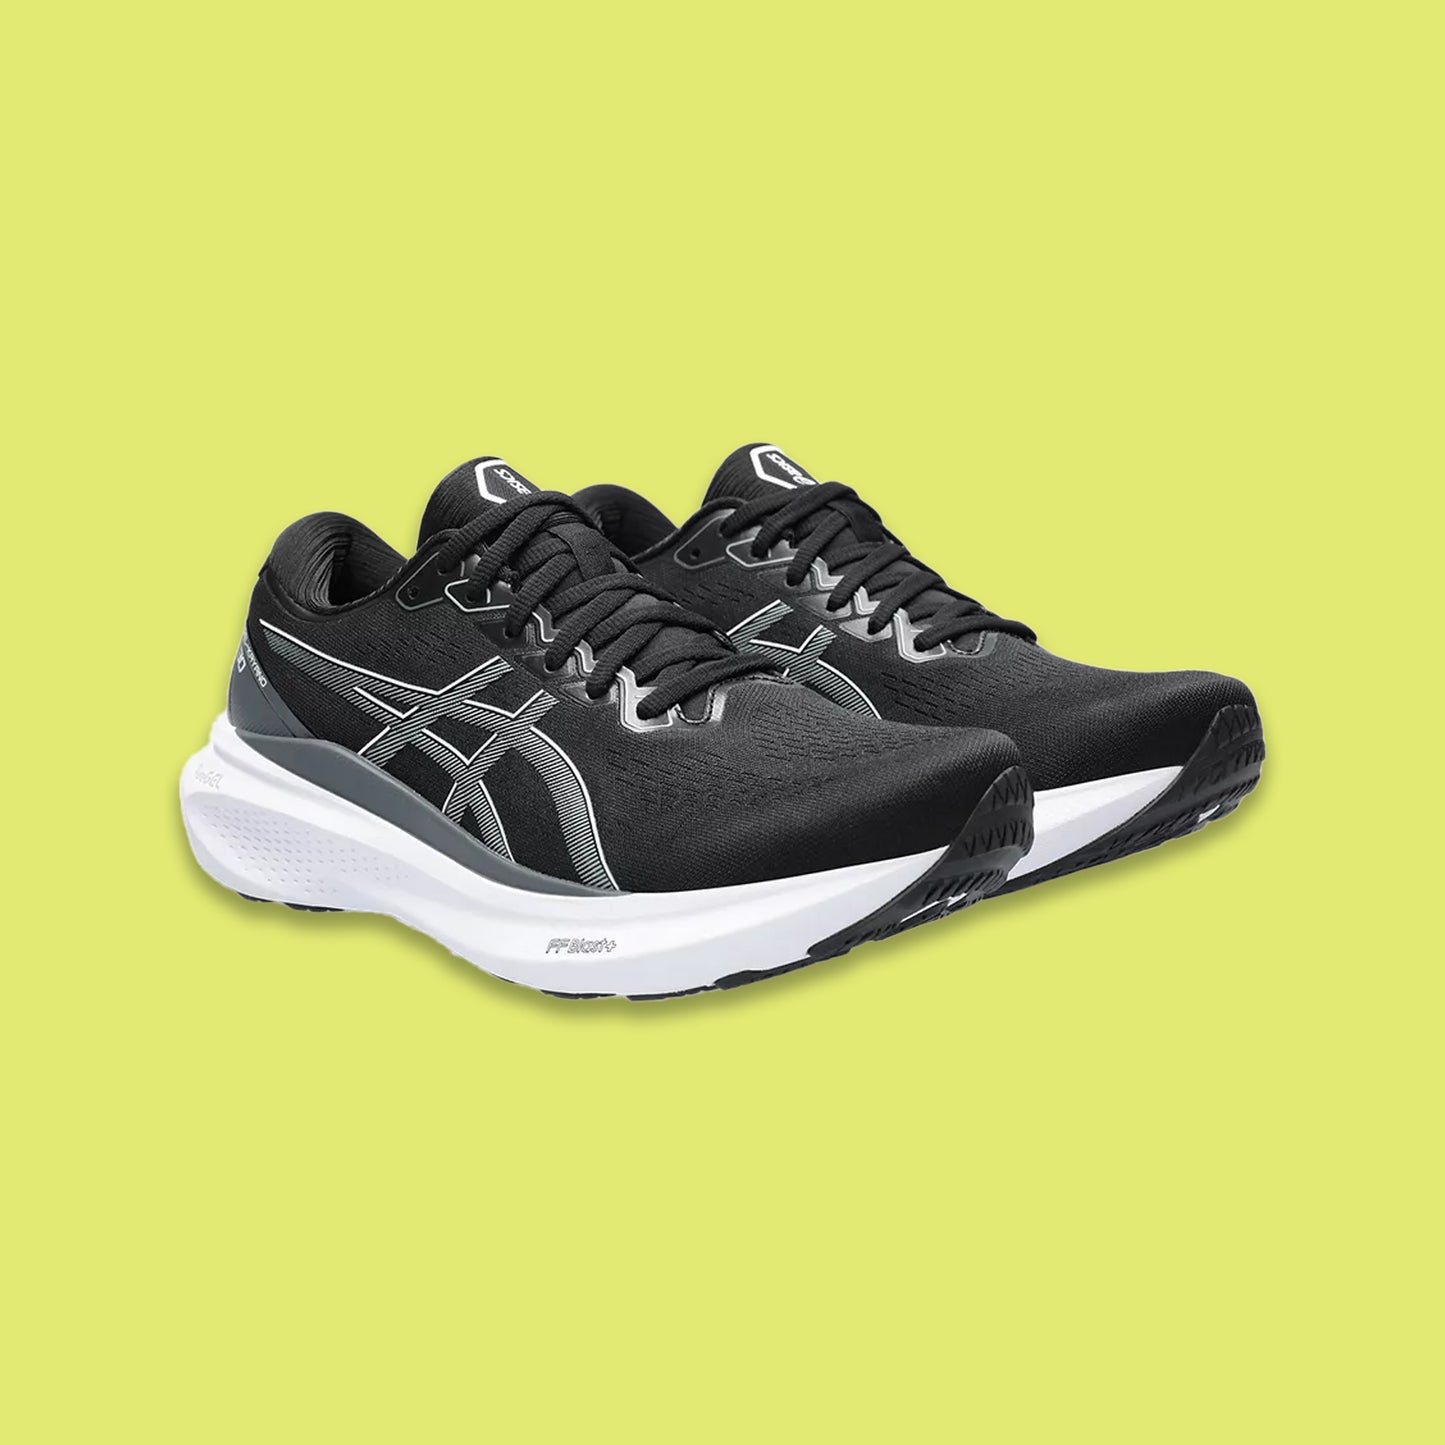 Men's Gel Kayano 30 - Maximum Cushioned Stability Running Shoes